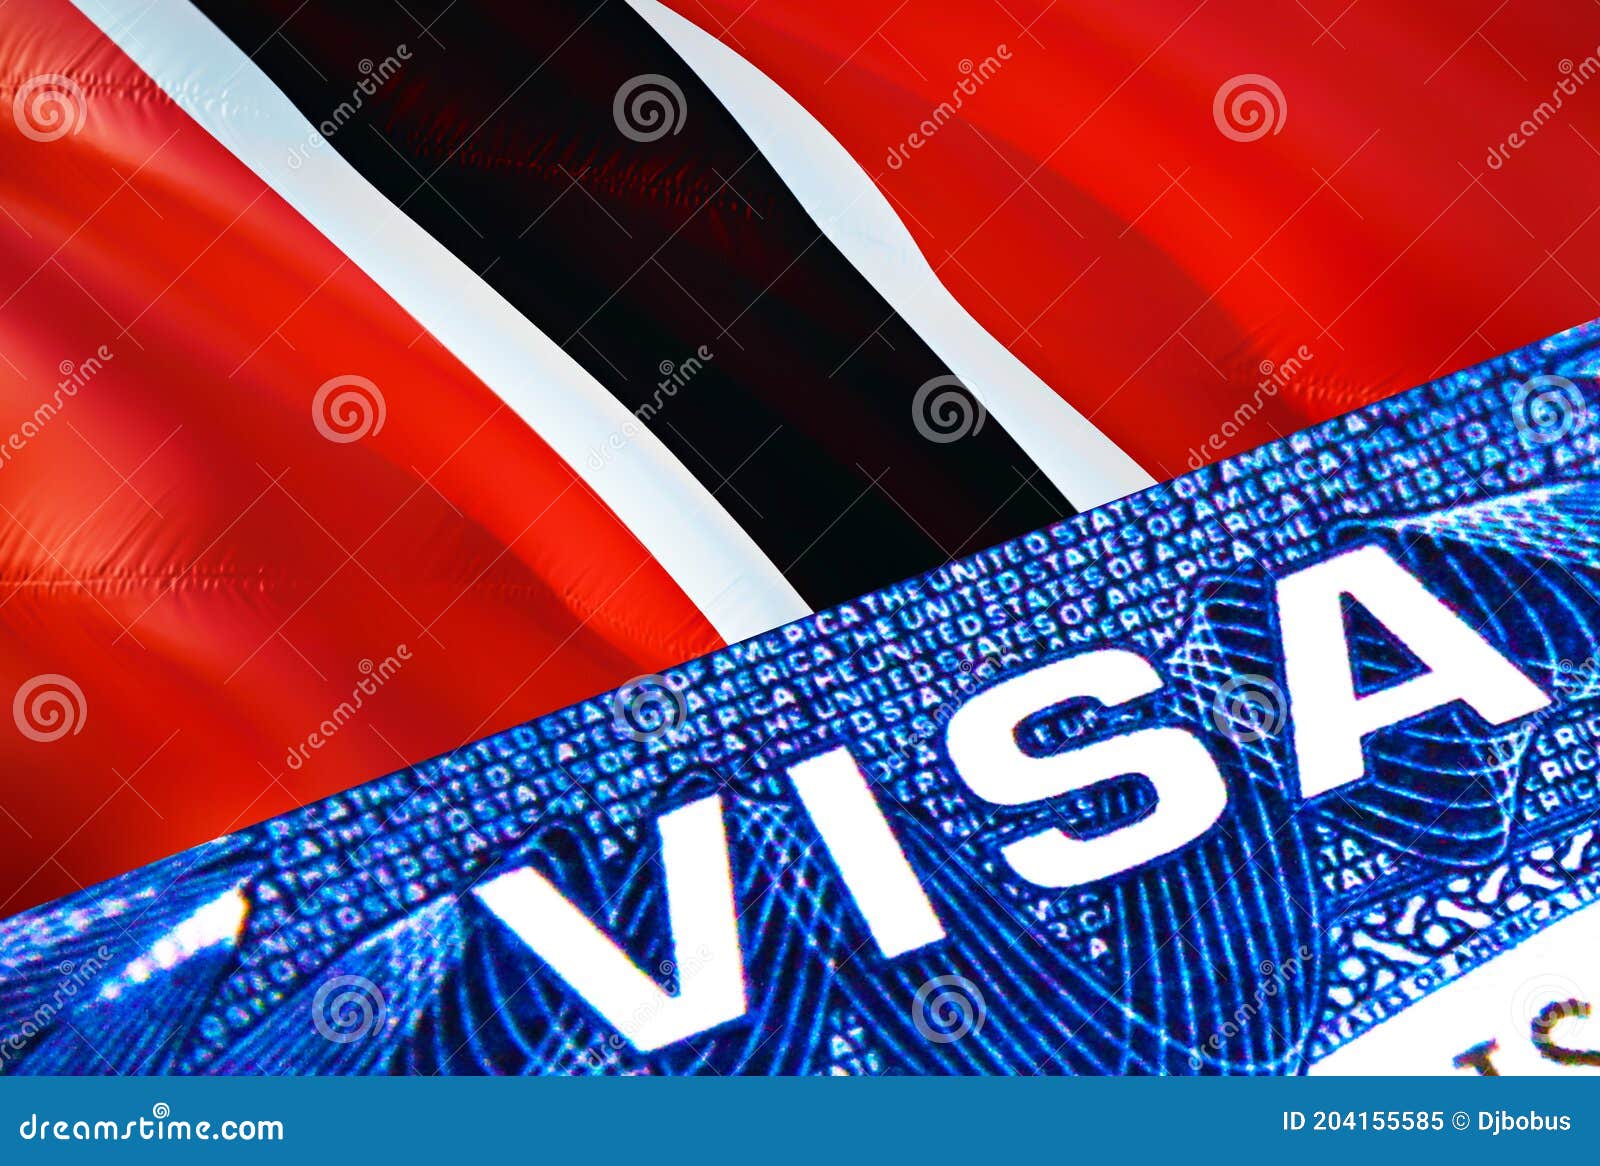 trinidad and tobago tourist visa